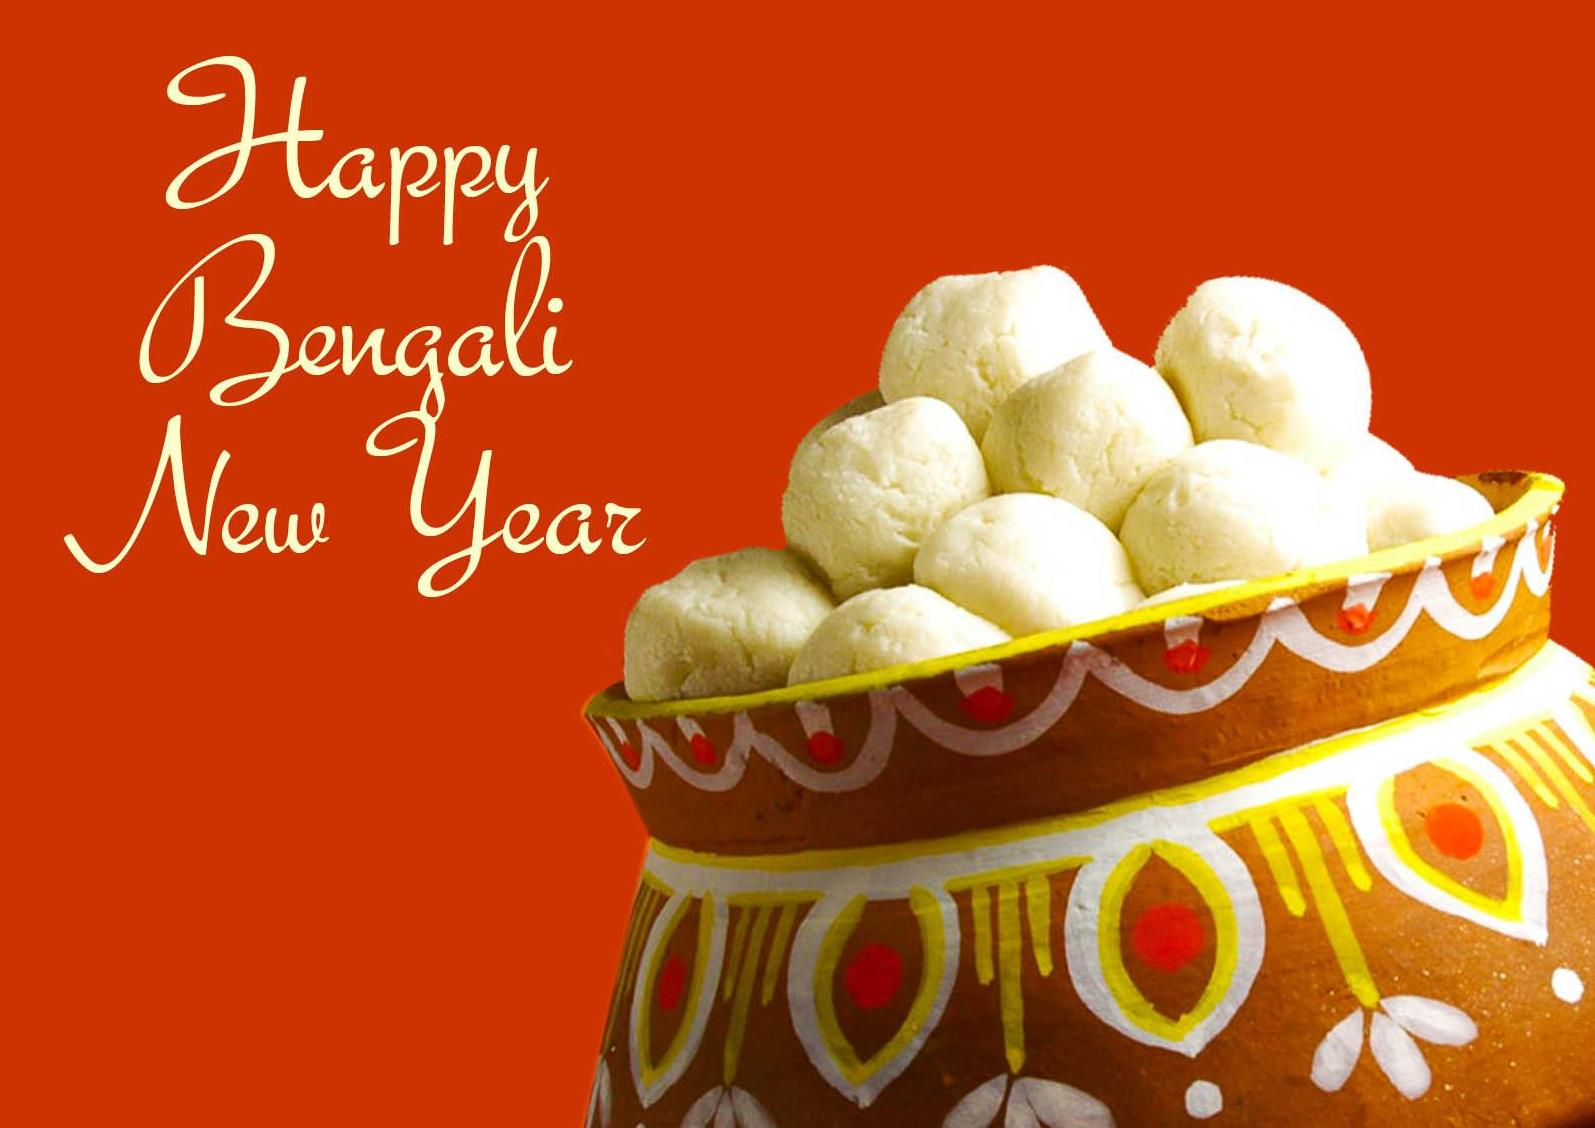 Happy New Year Bengali Greetings Wallpaper